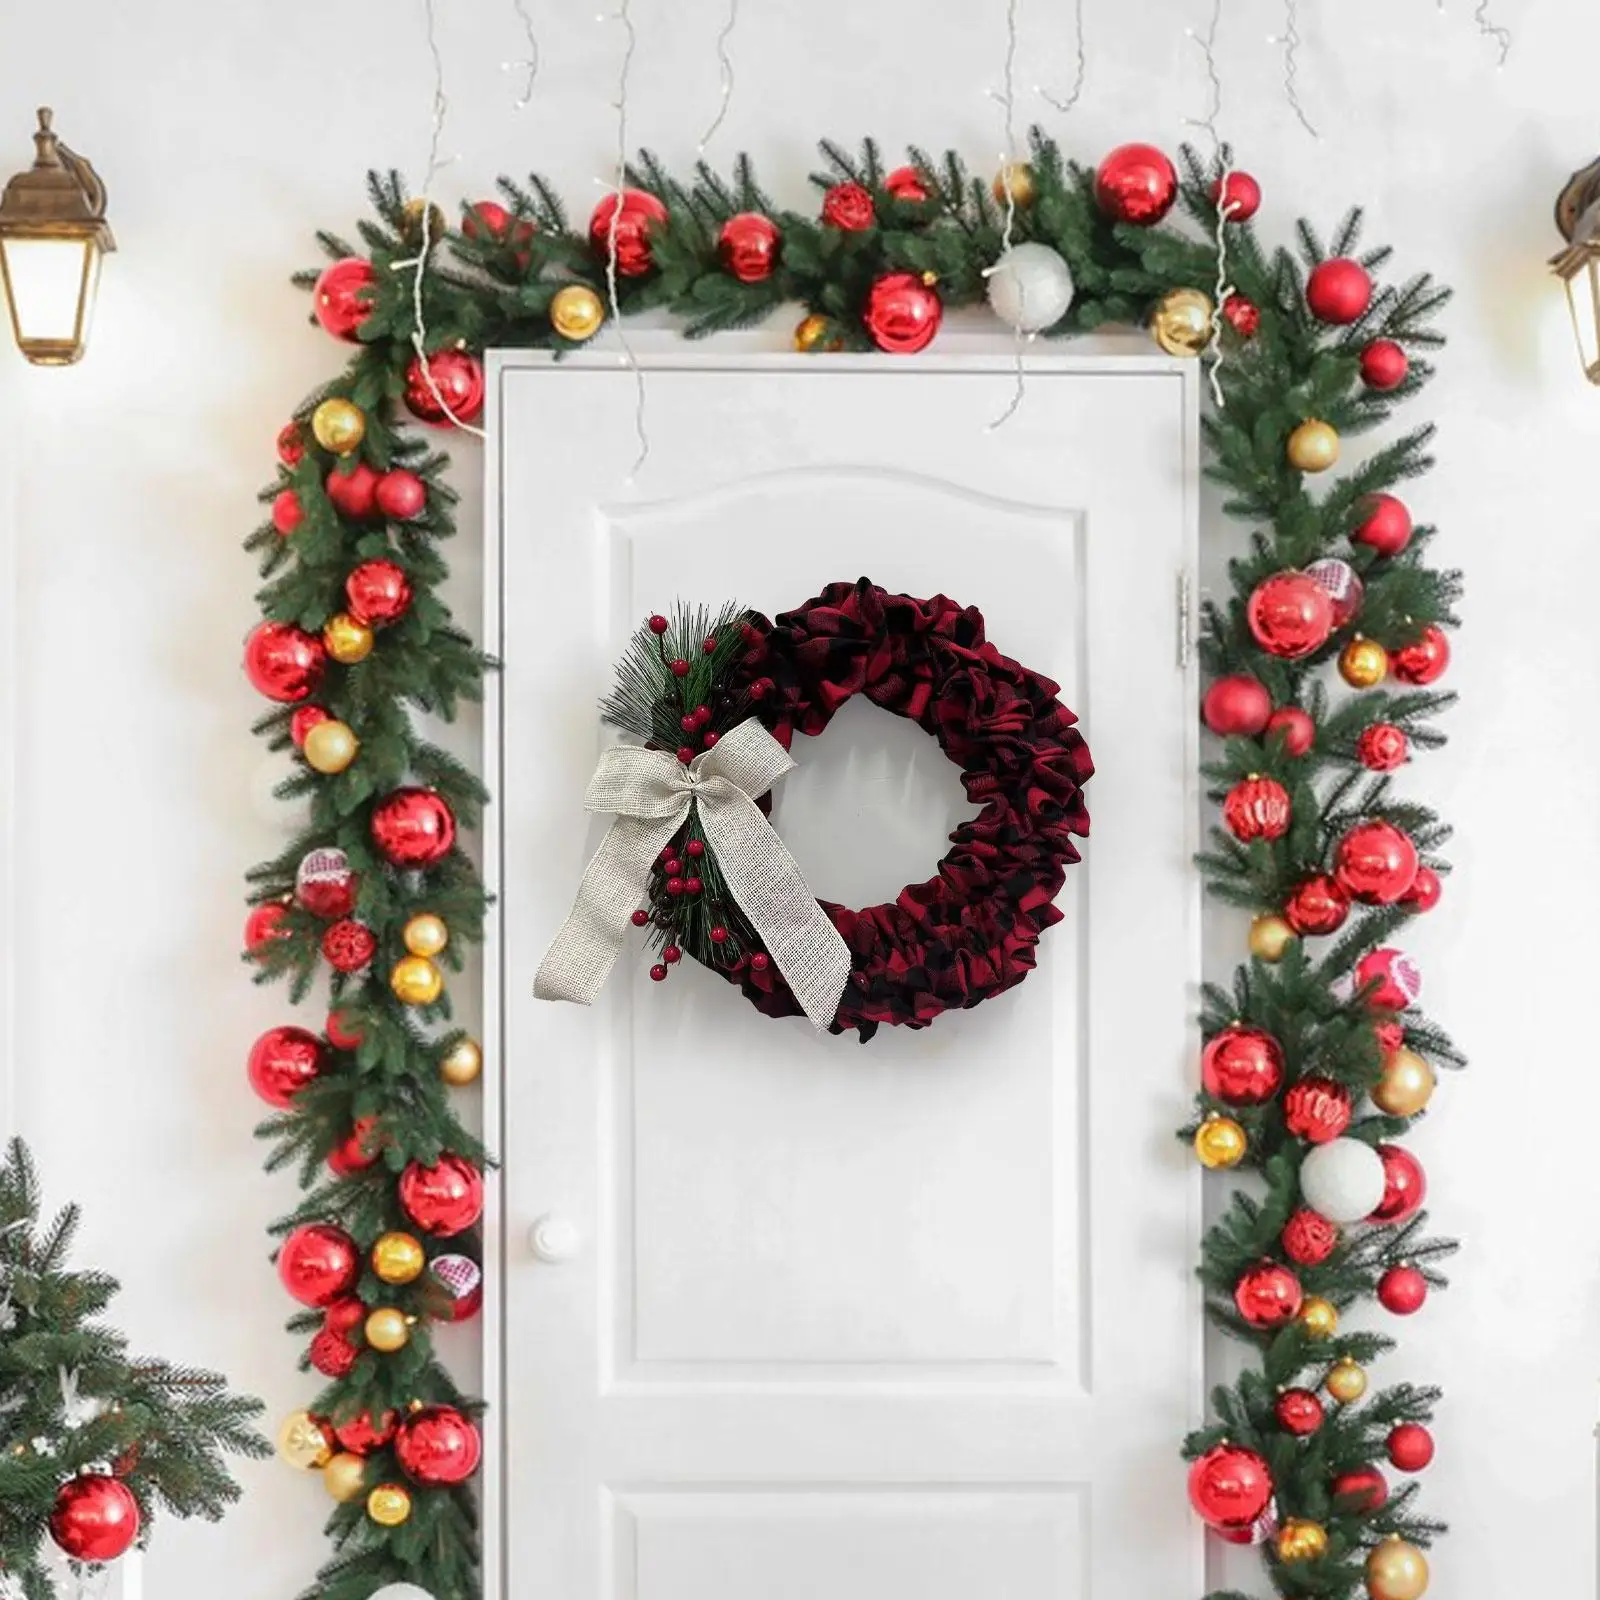 Artificial Wreath Garland Christmas Round Wreath for Porch Home Wedding